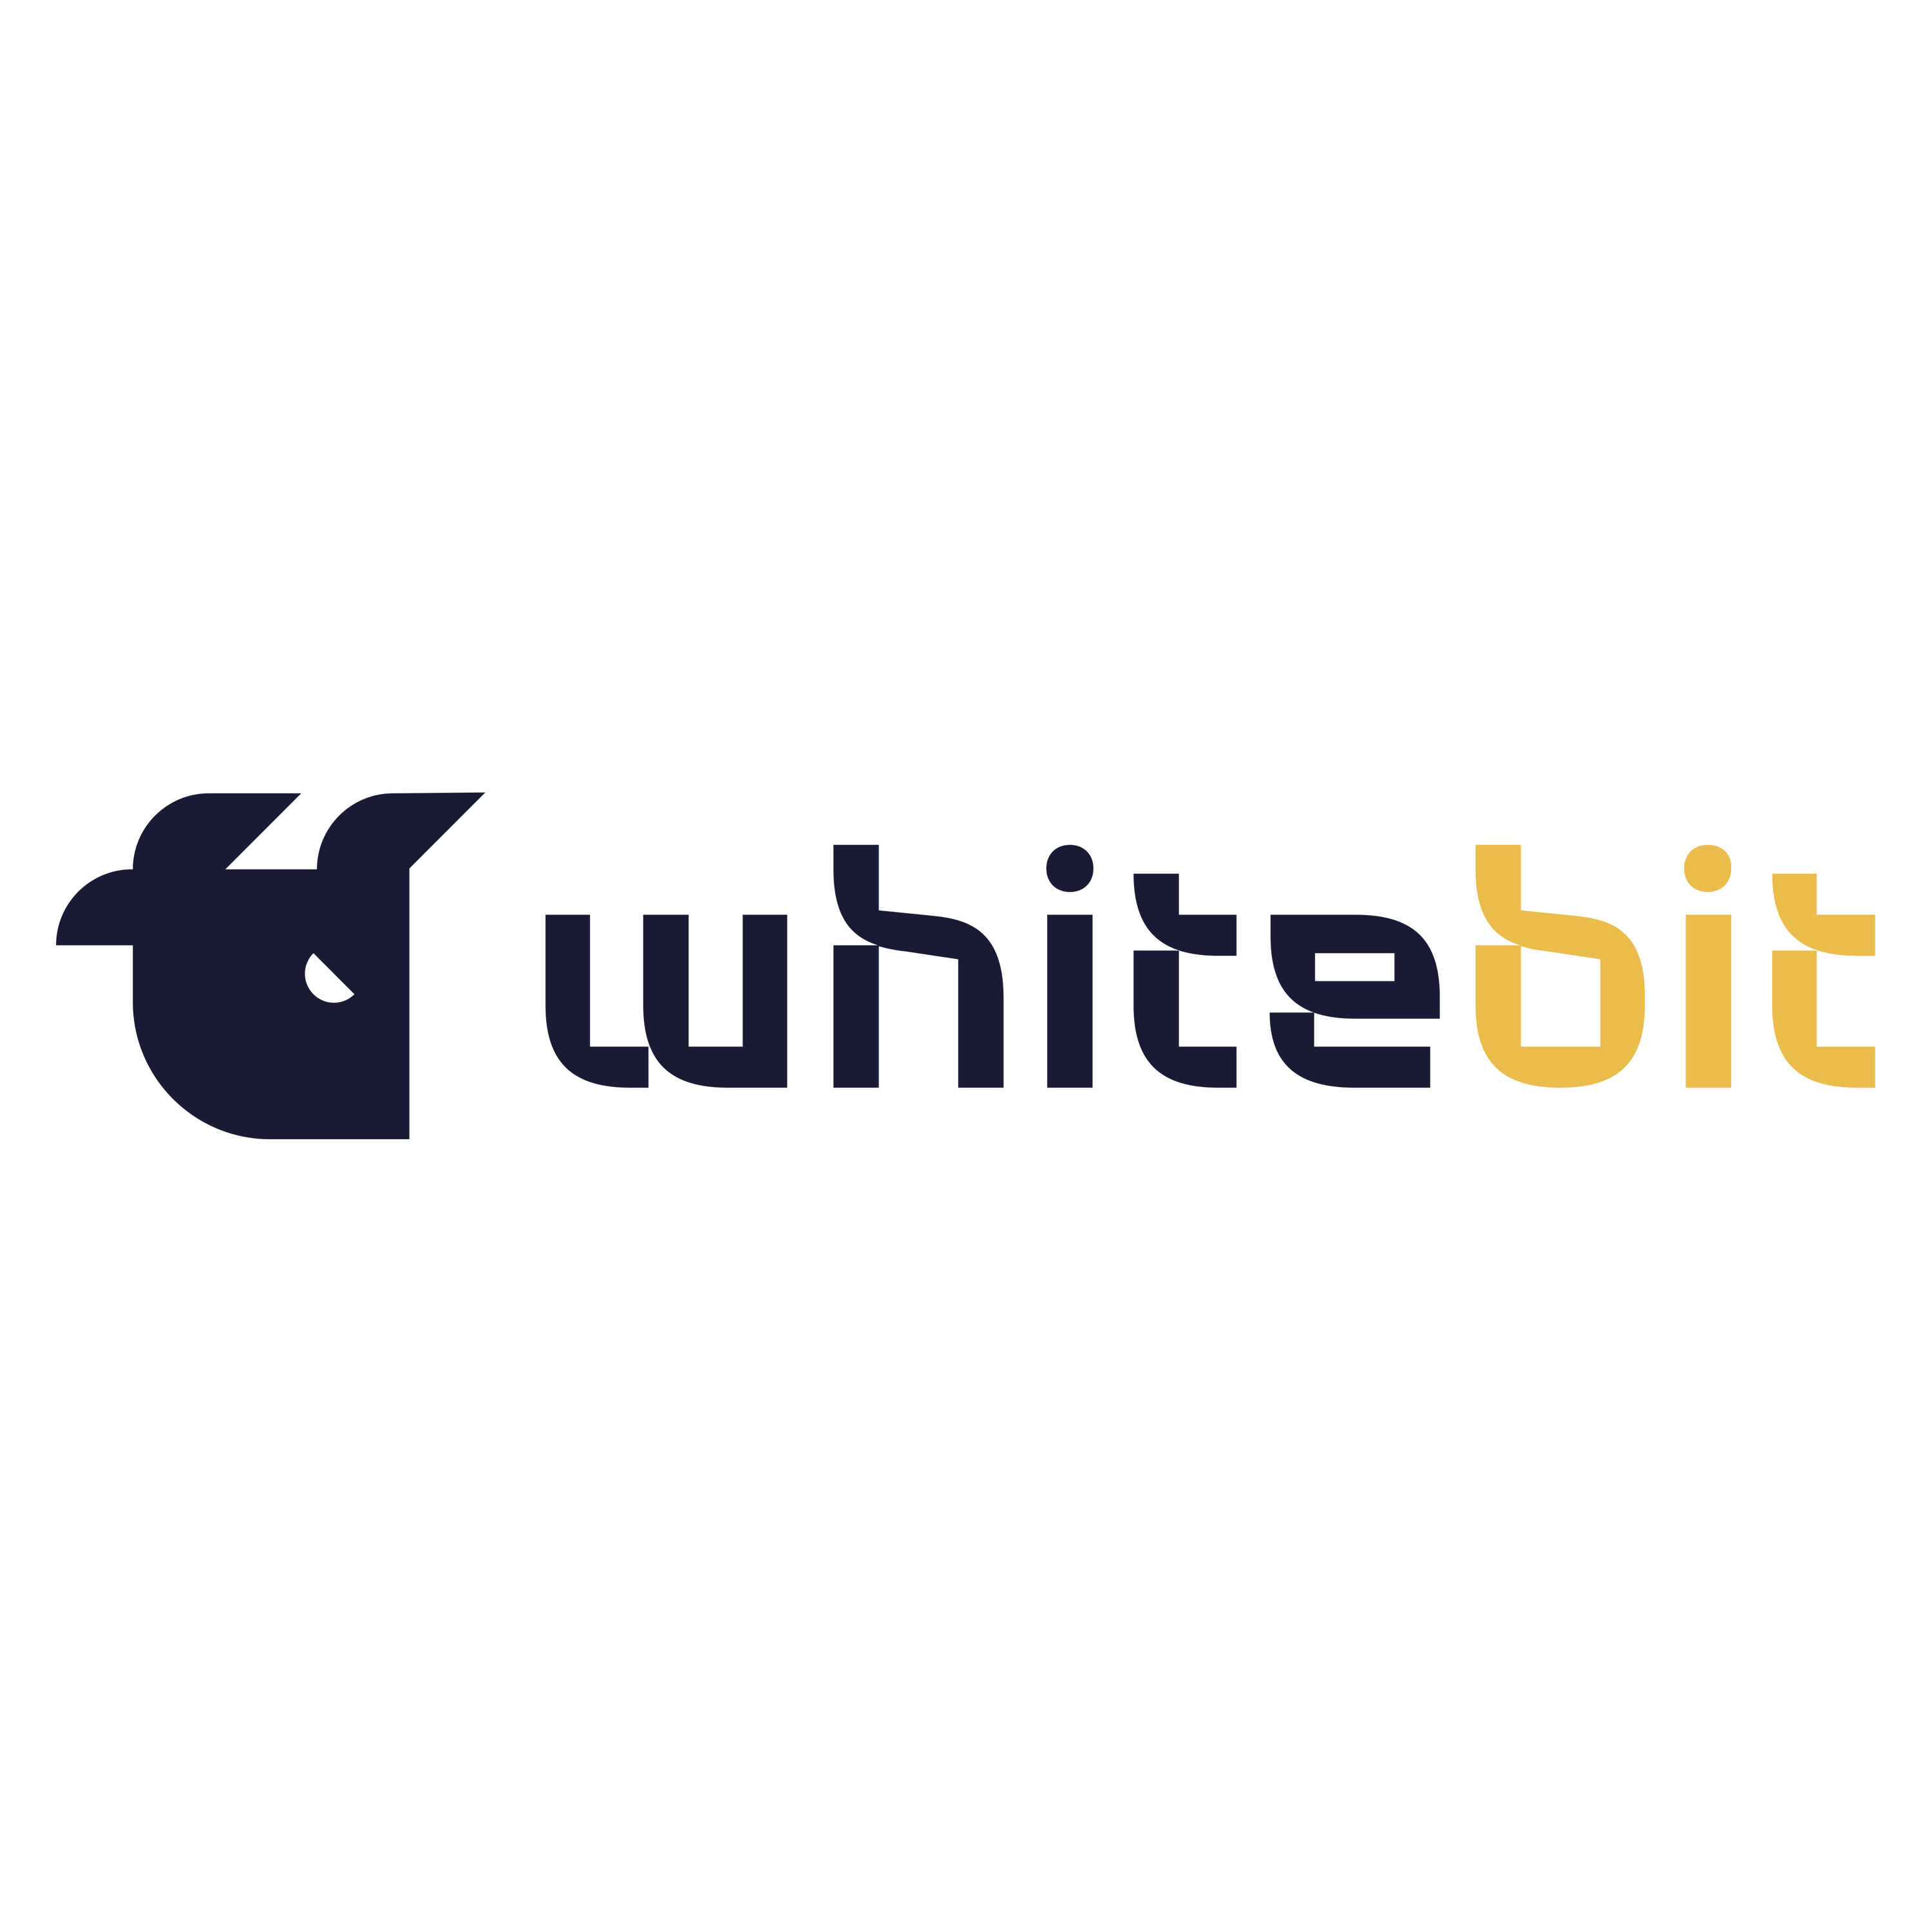 Whitebit Logo Transparent Image